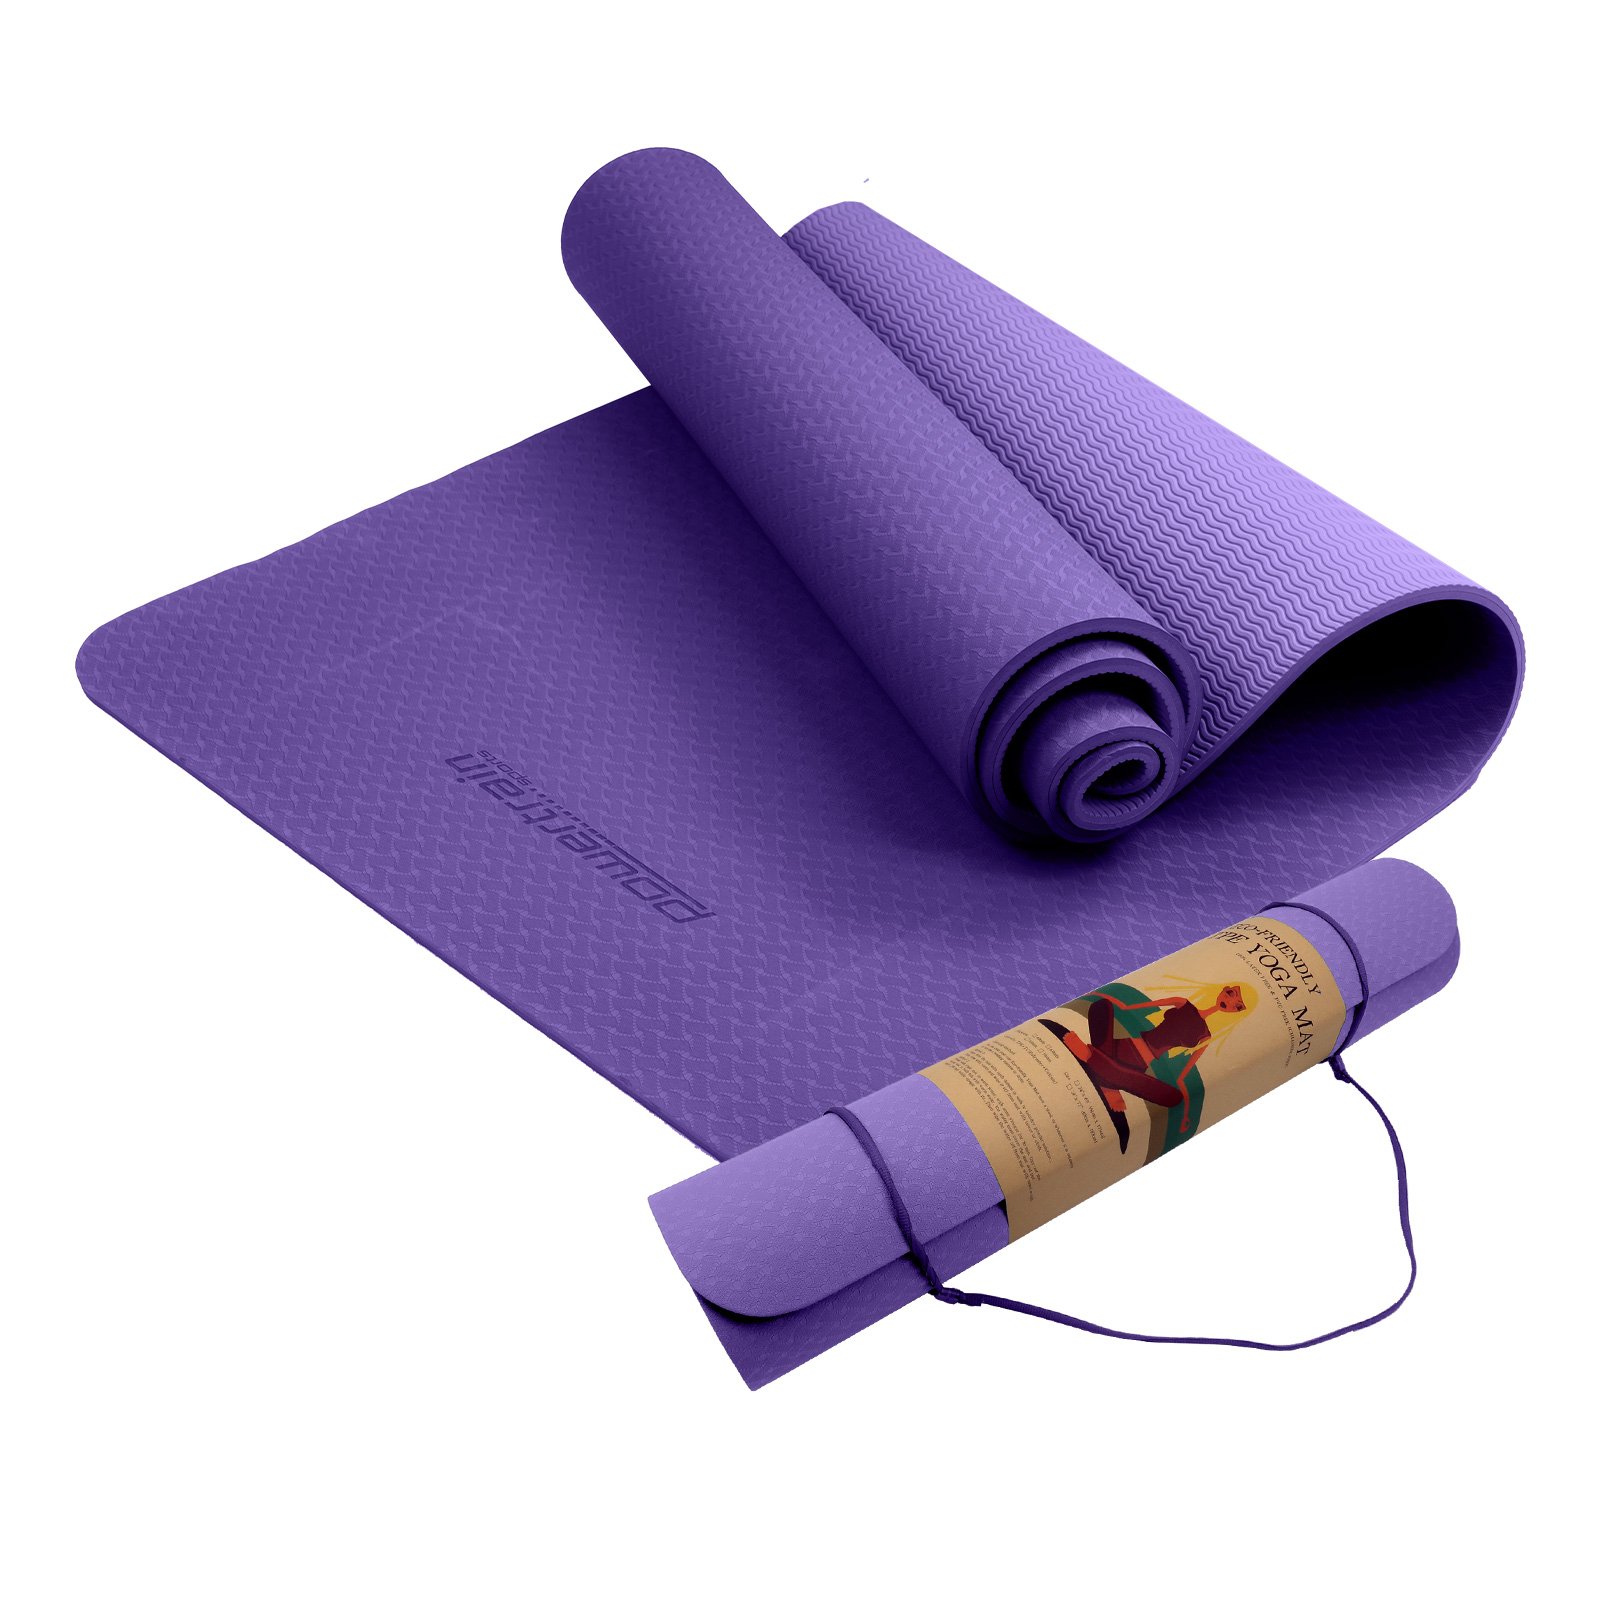 Powertrain Eco-Friendly TPE Yoga Pilates Exercise Mat 6mm - Lilac 1